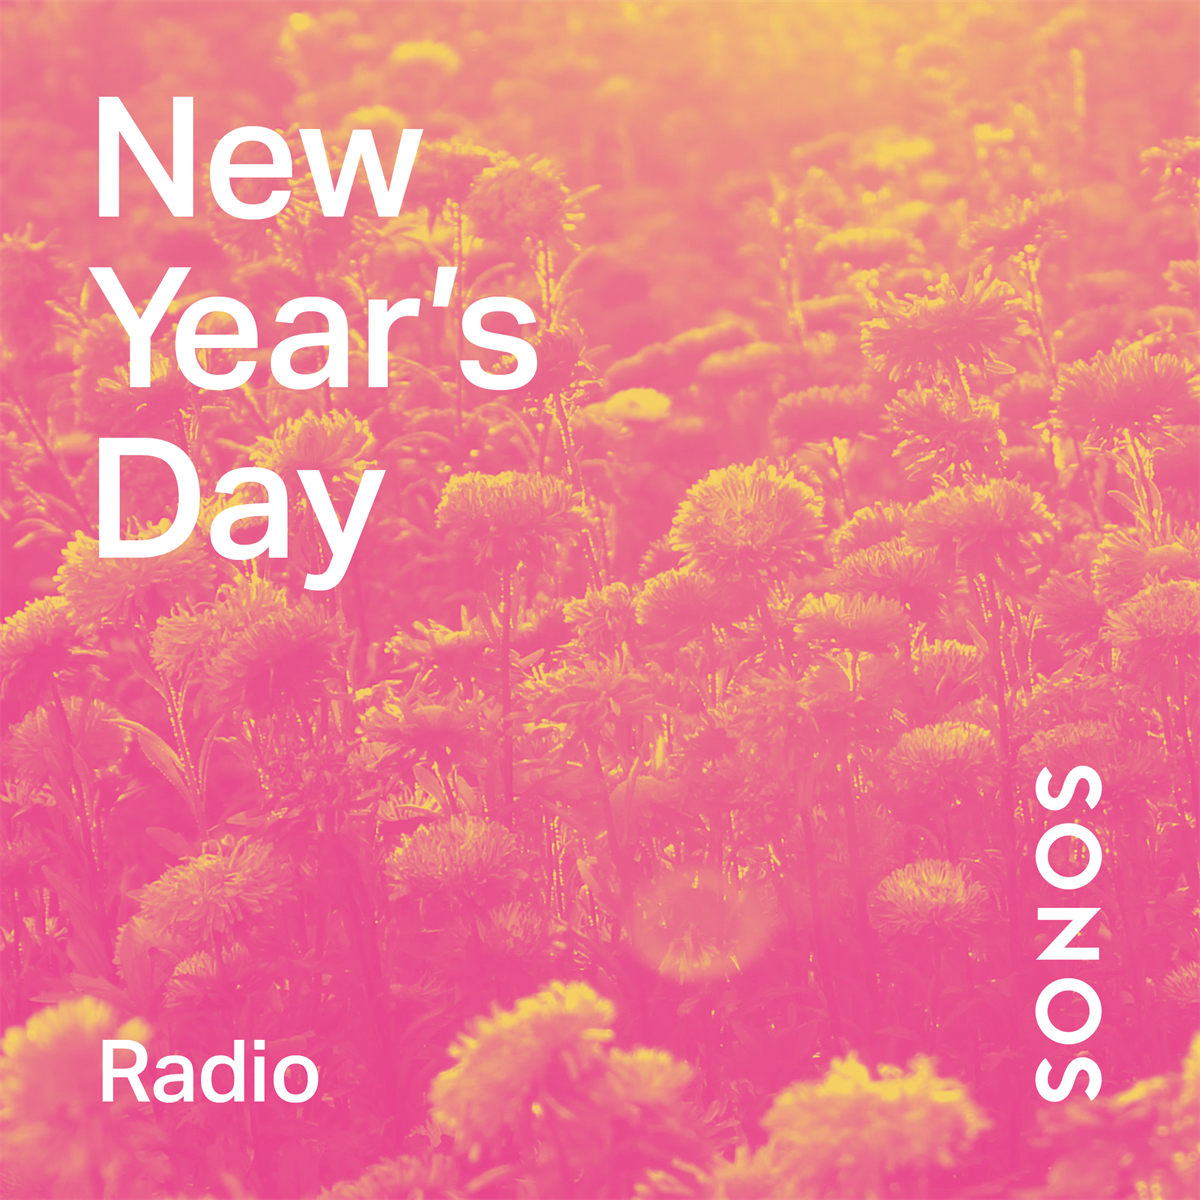 Sonos Radio Stations